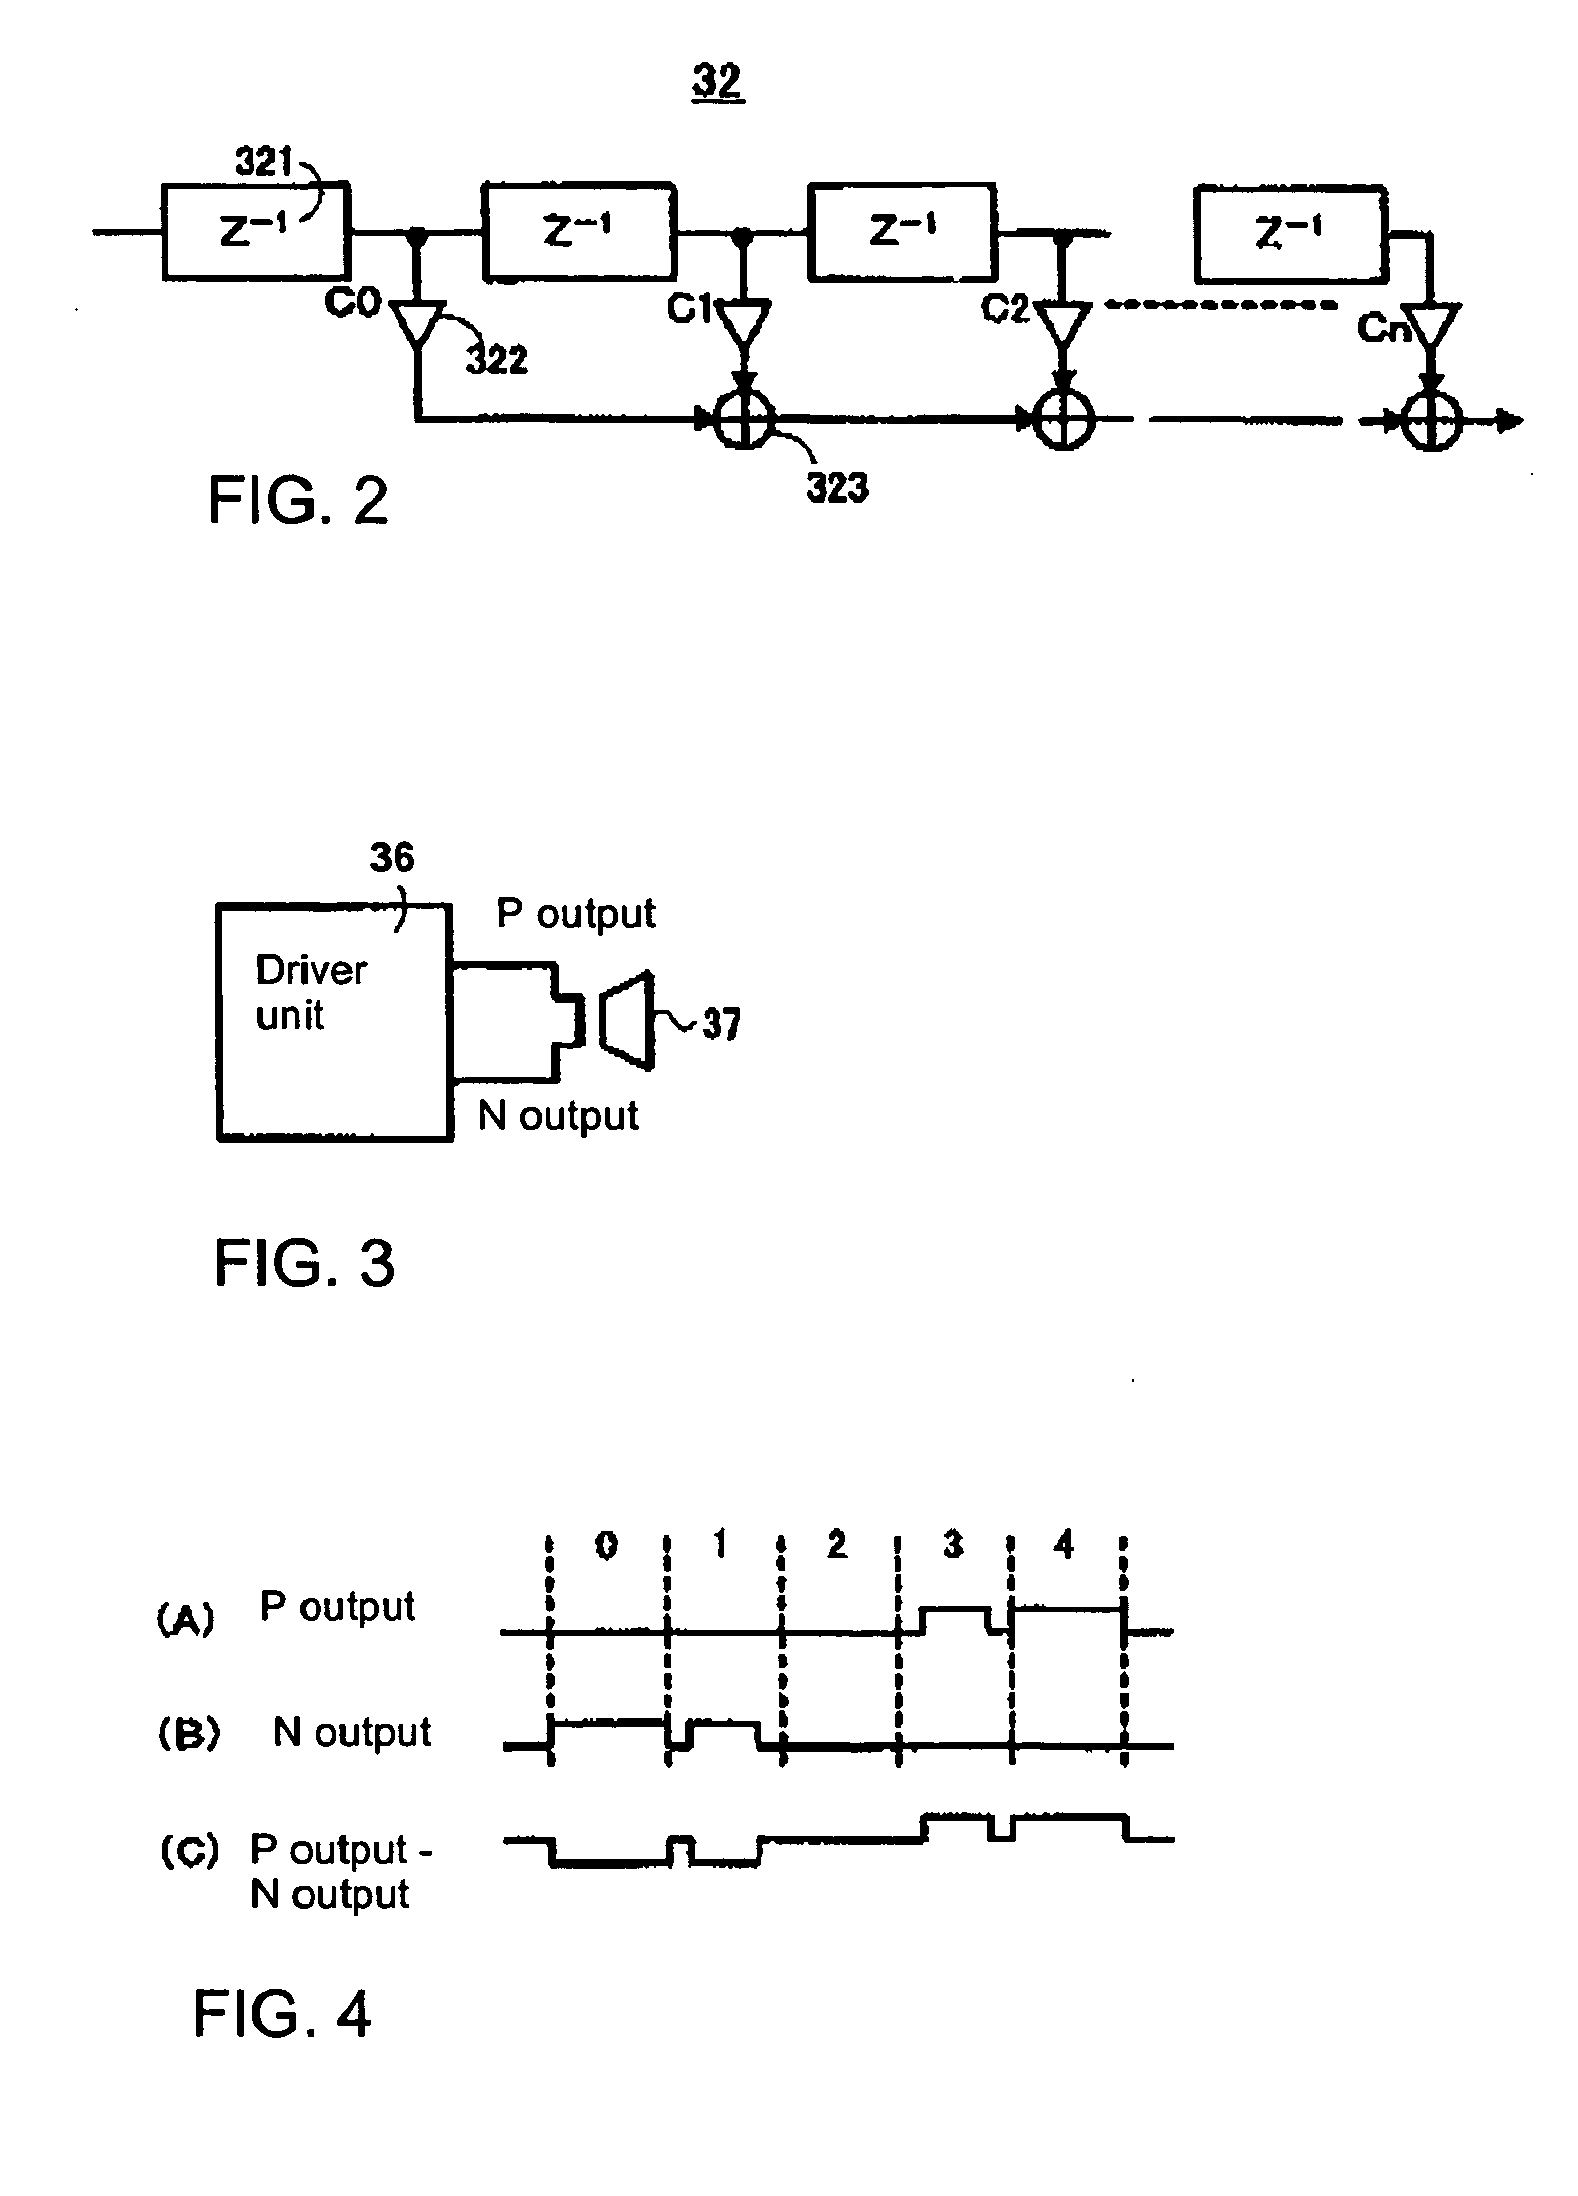 Audio signal amplification method and apparatus